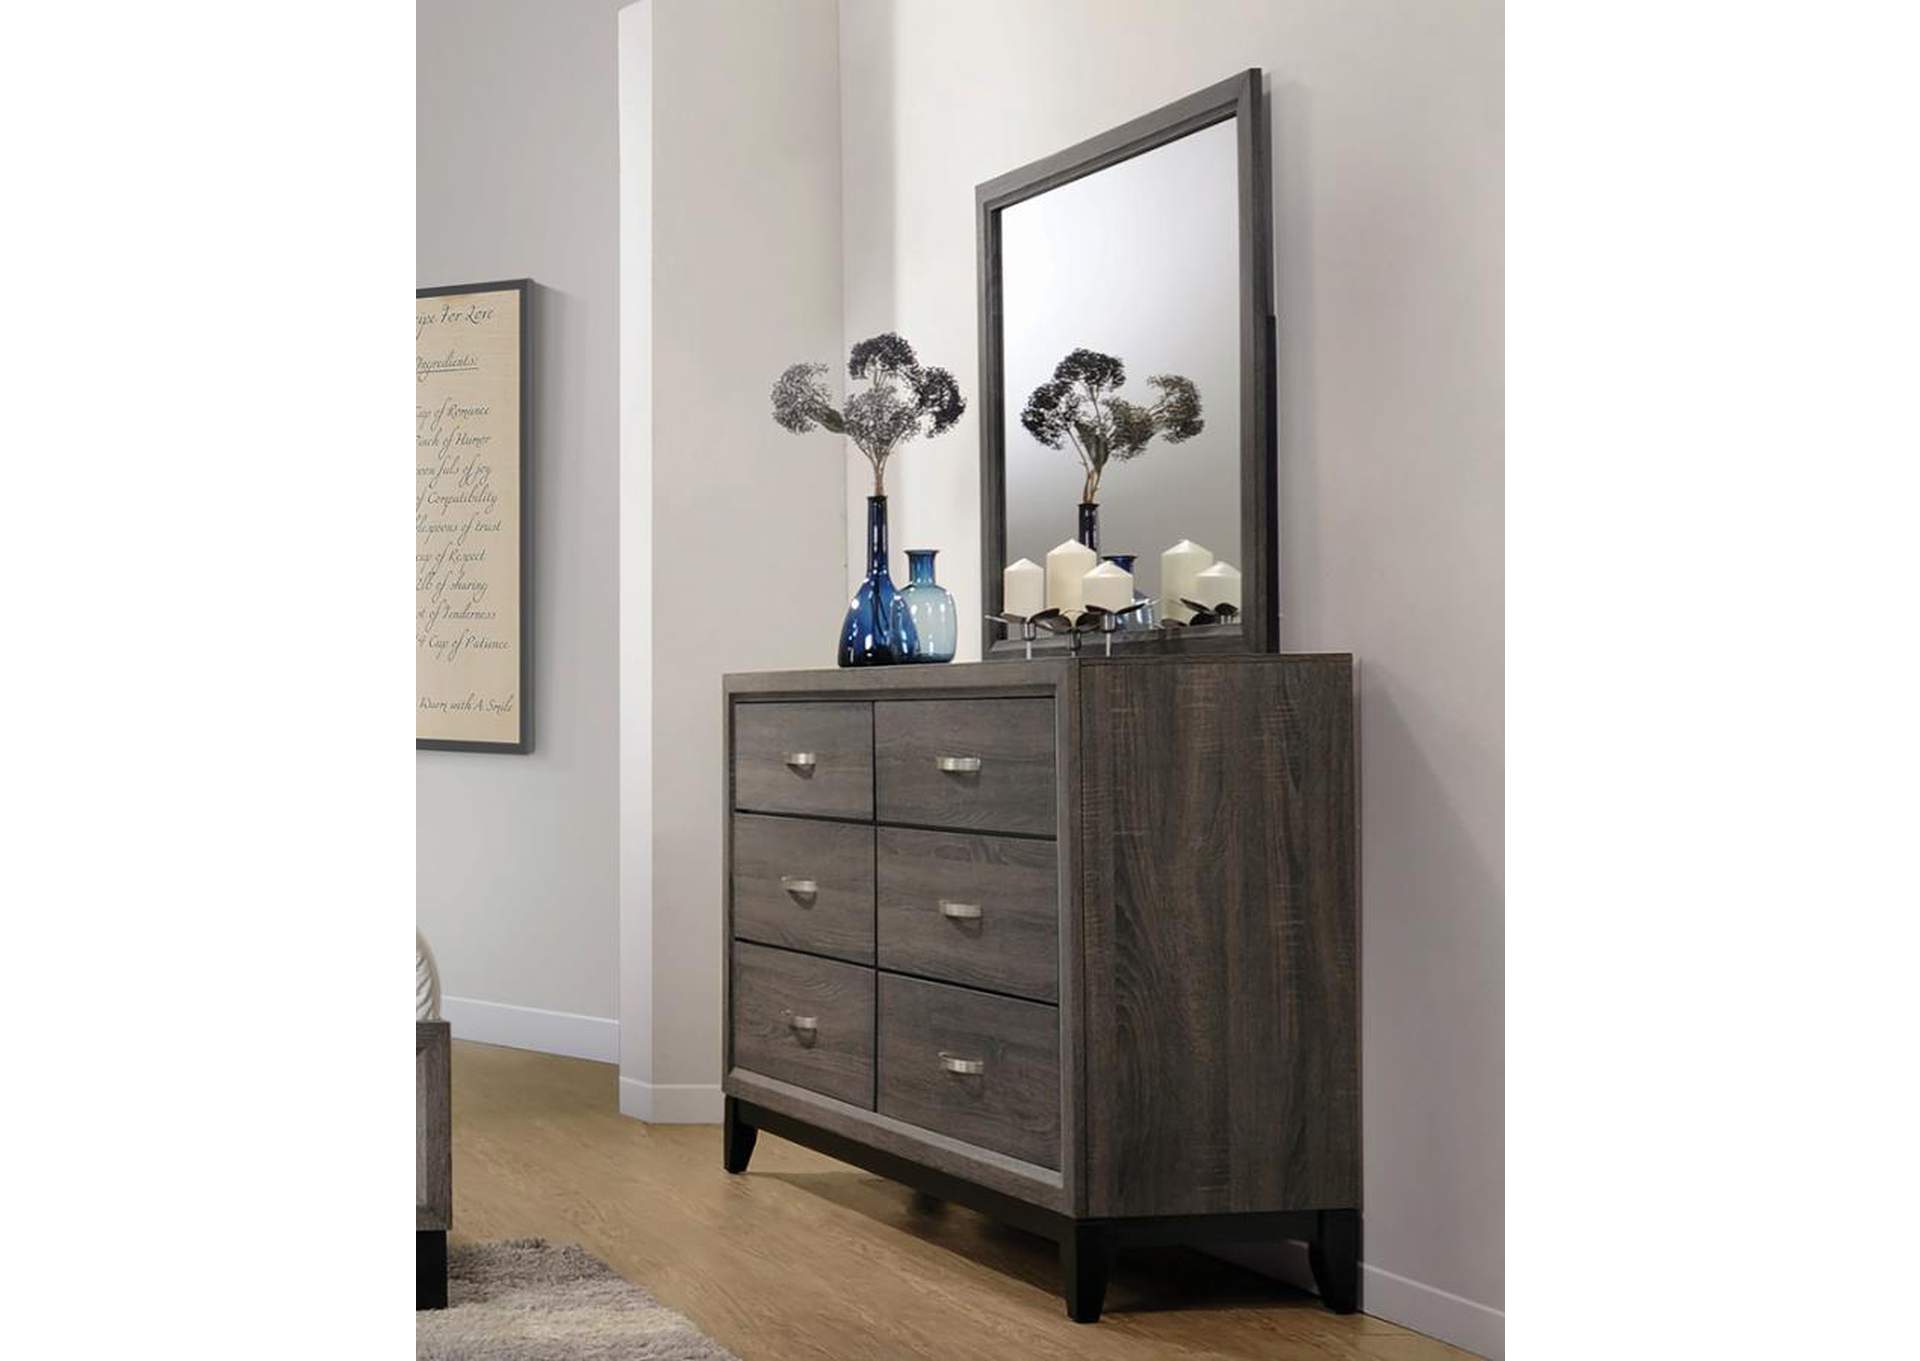 Watson 6-Drawer Dresser Grey Oak And Black,Coaster Furniture